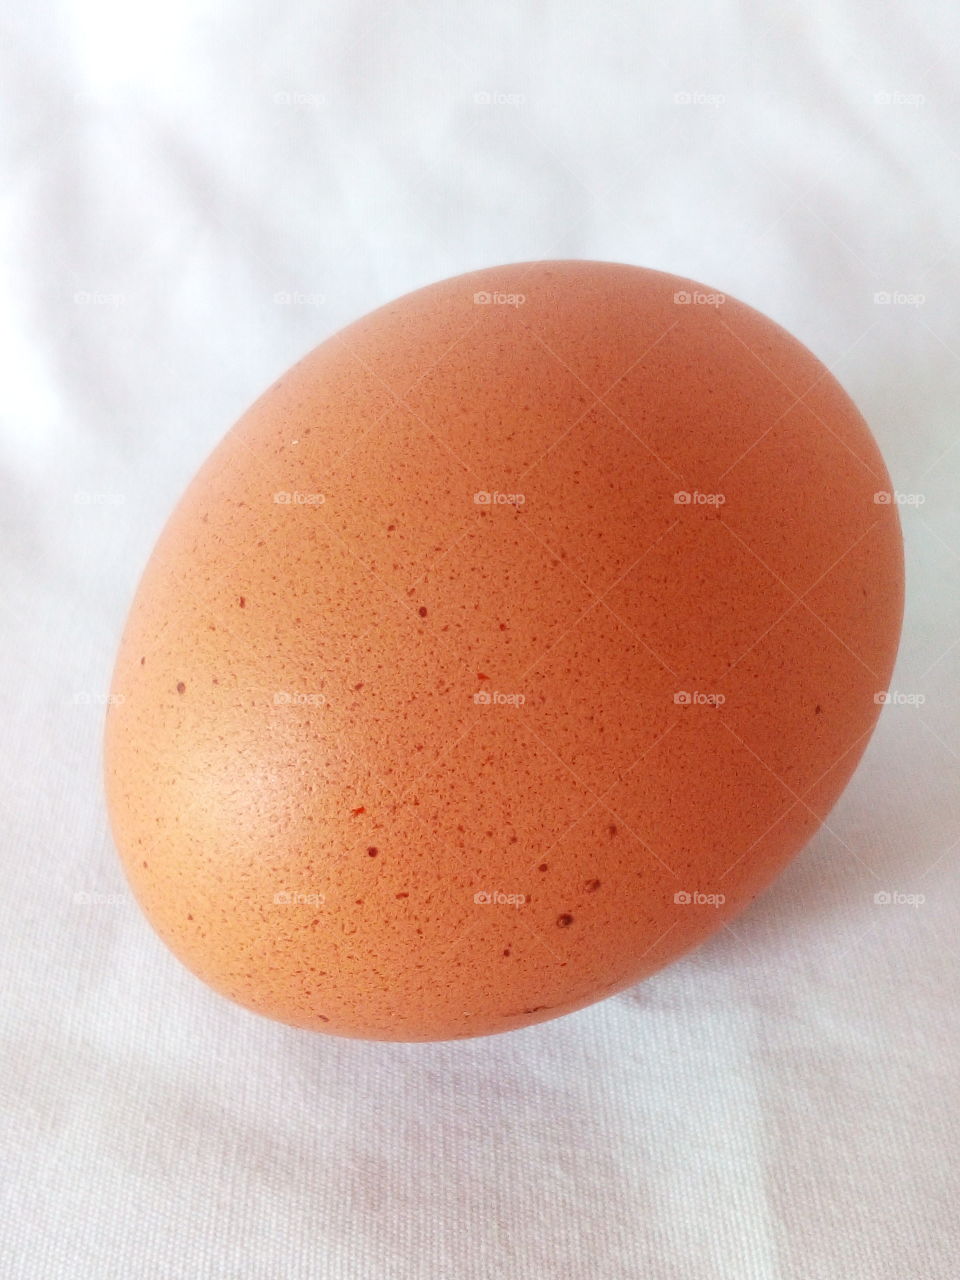 Fresh eggs, eggs from the egg farm go through natural egg substances